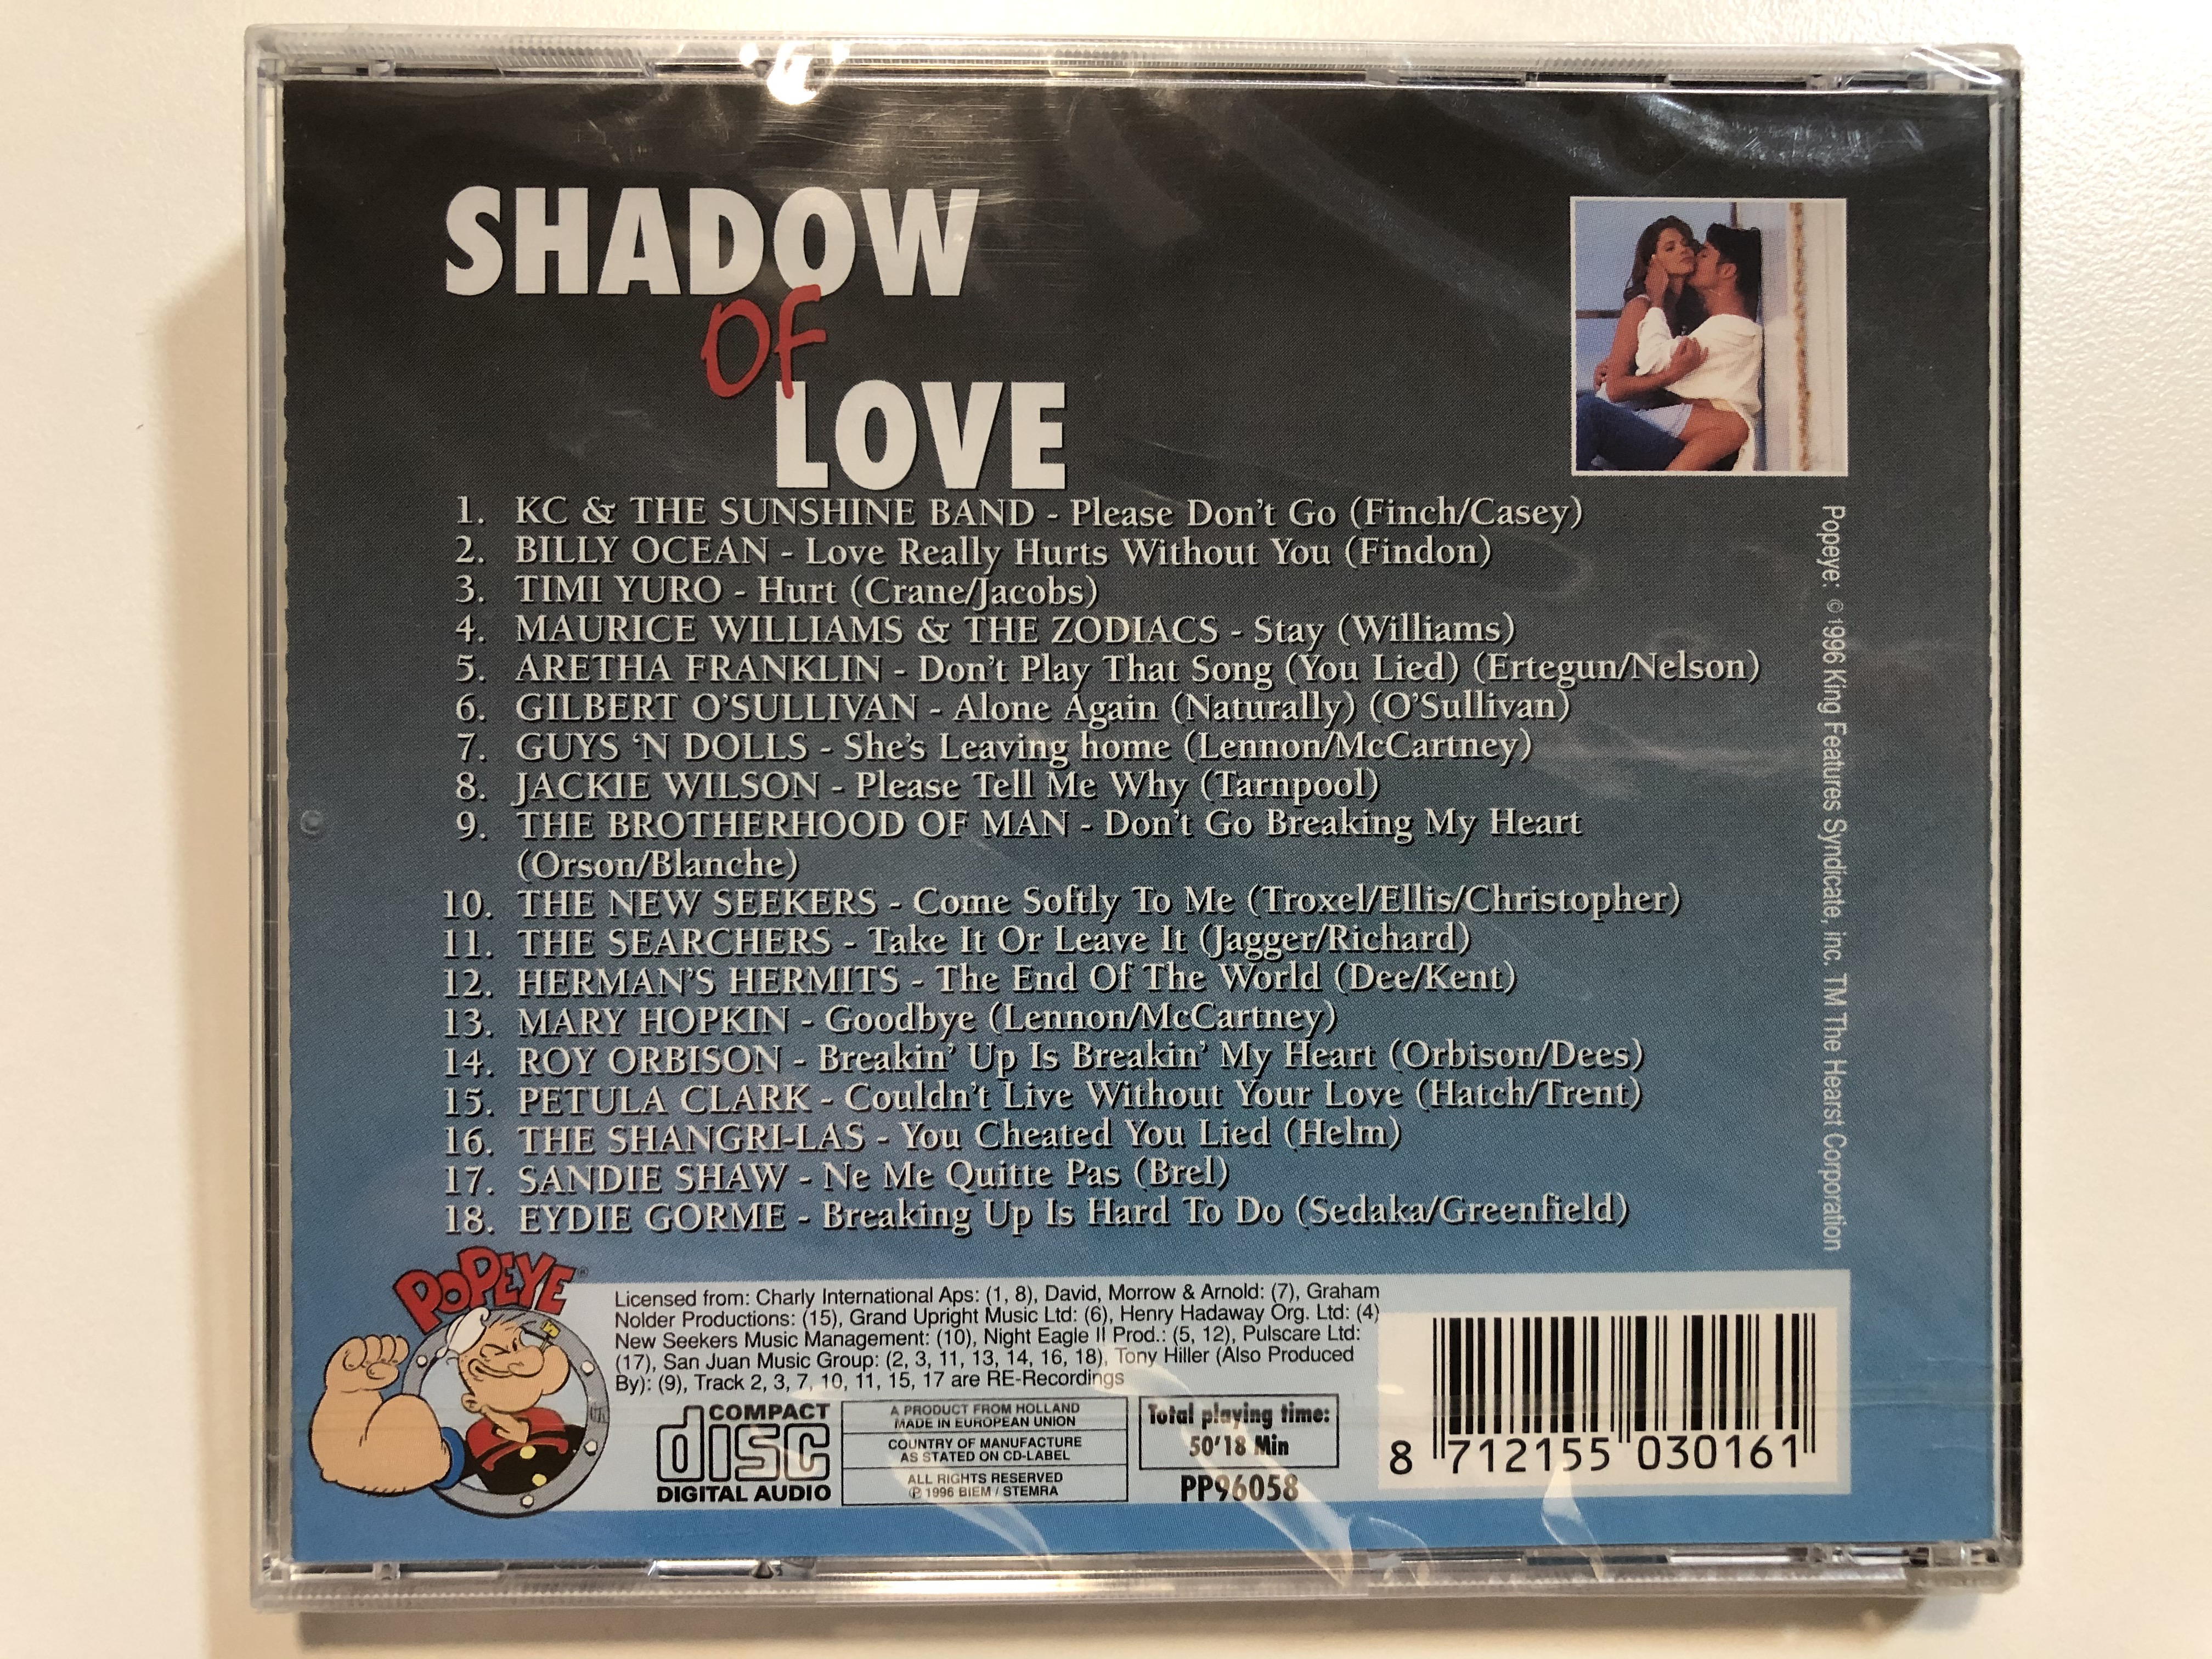 shadow-of-love-gilbert-o-sullivan-guys-n-dolls-roy-orbison-sandie-shaw-timi-yuro-aretha-franklin-petula-clark-billy-ocean-popeye-audio-cd-1996-pp96058-2-.jpg